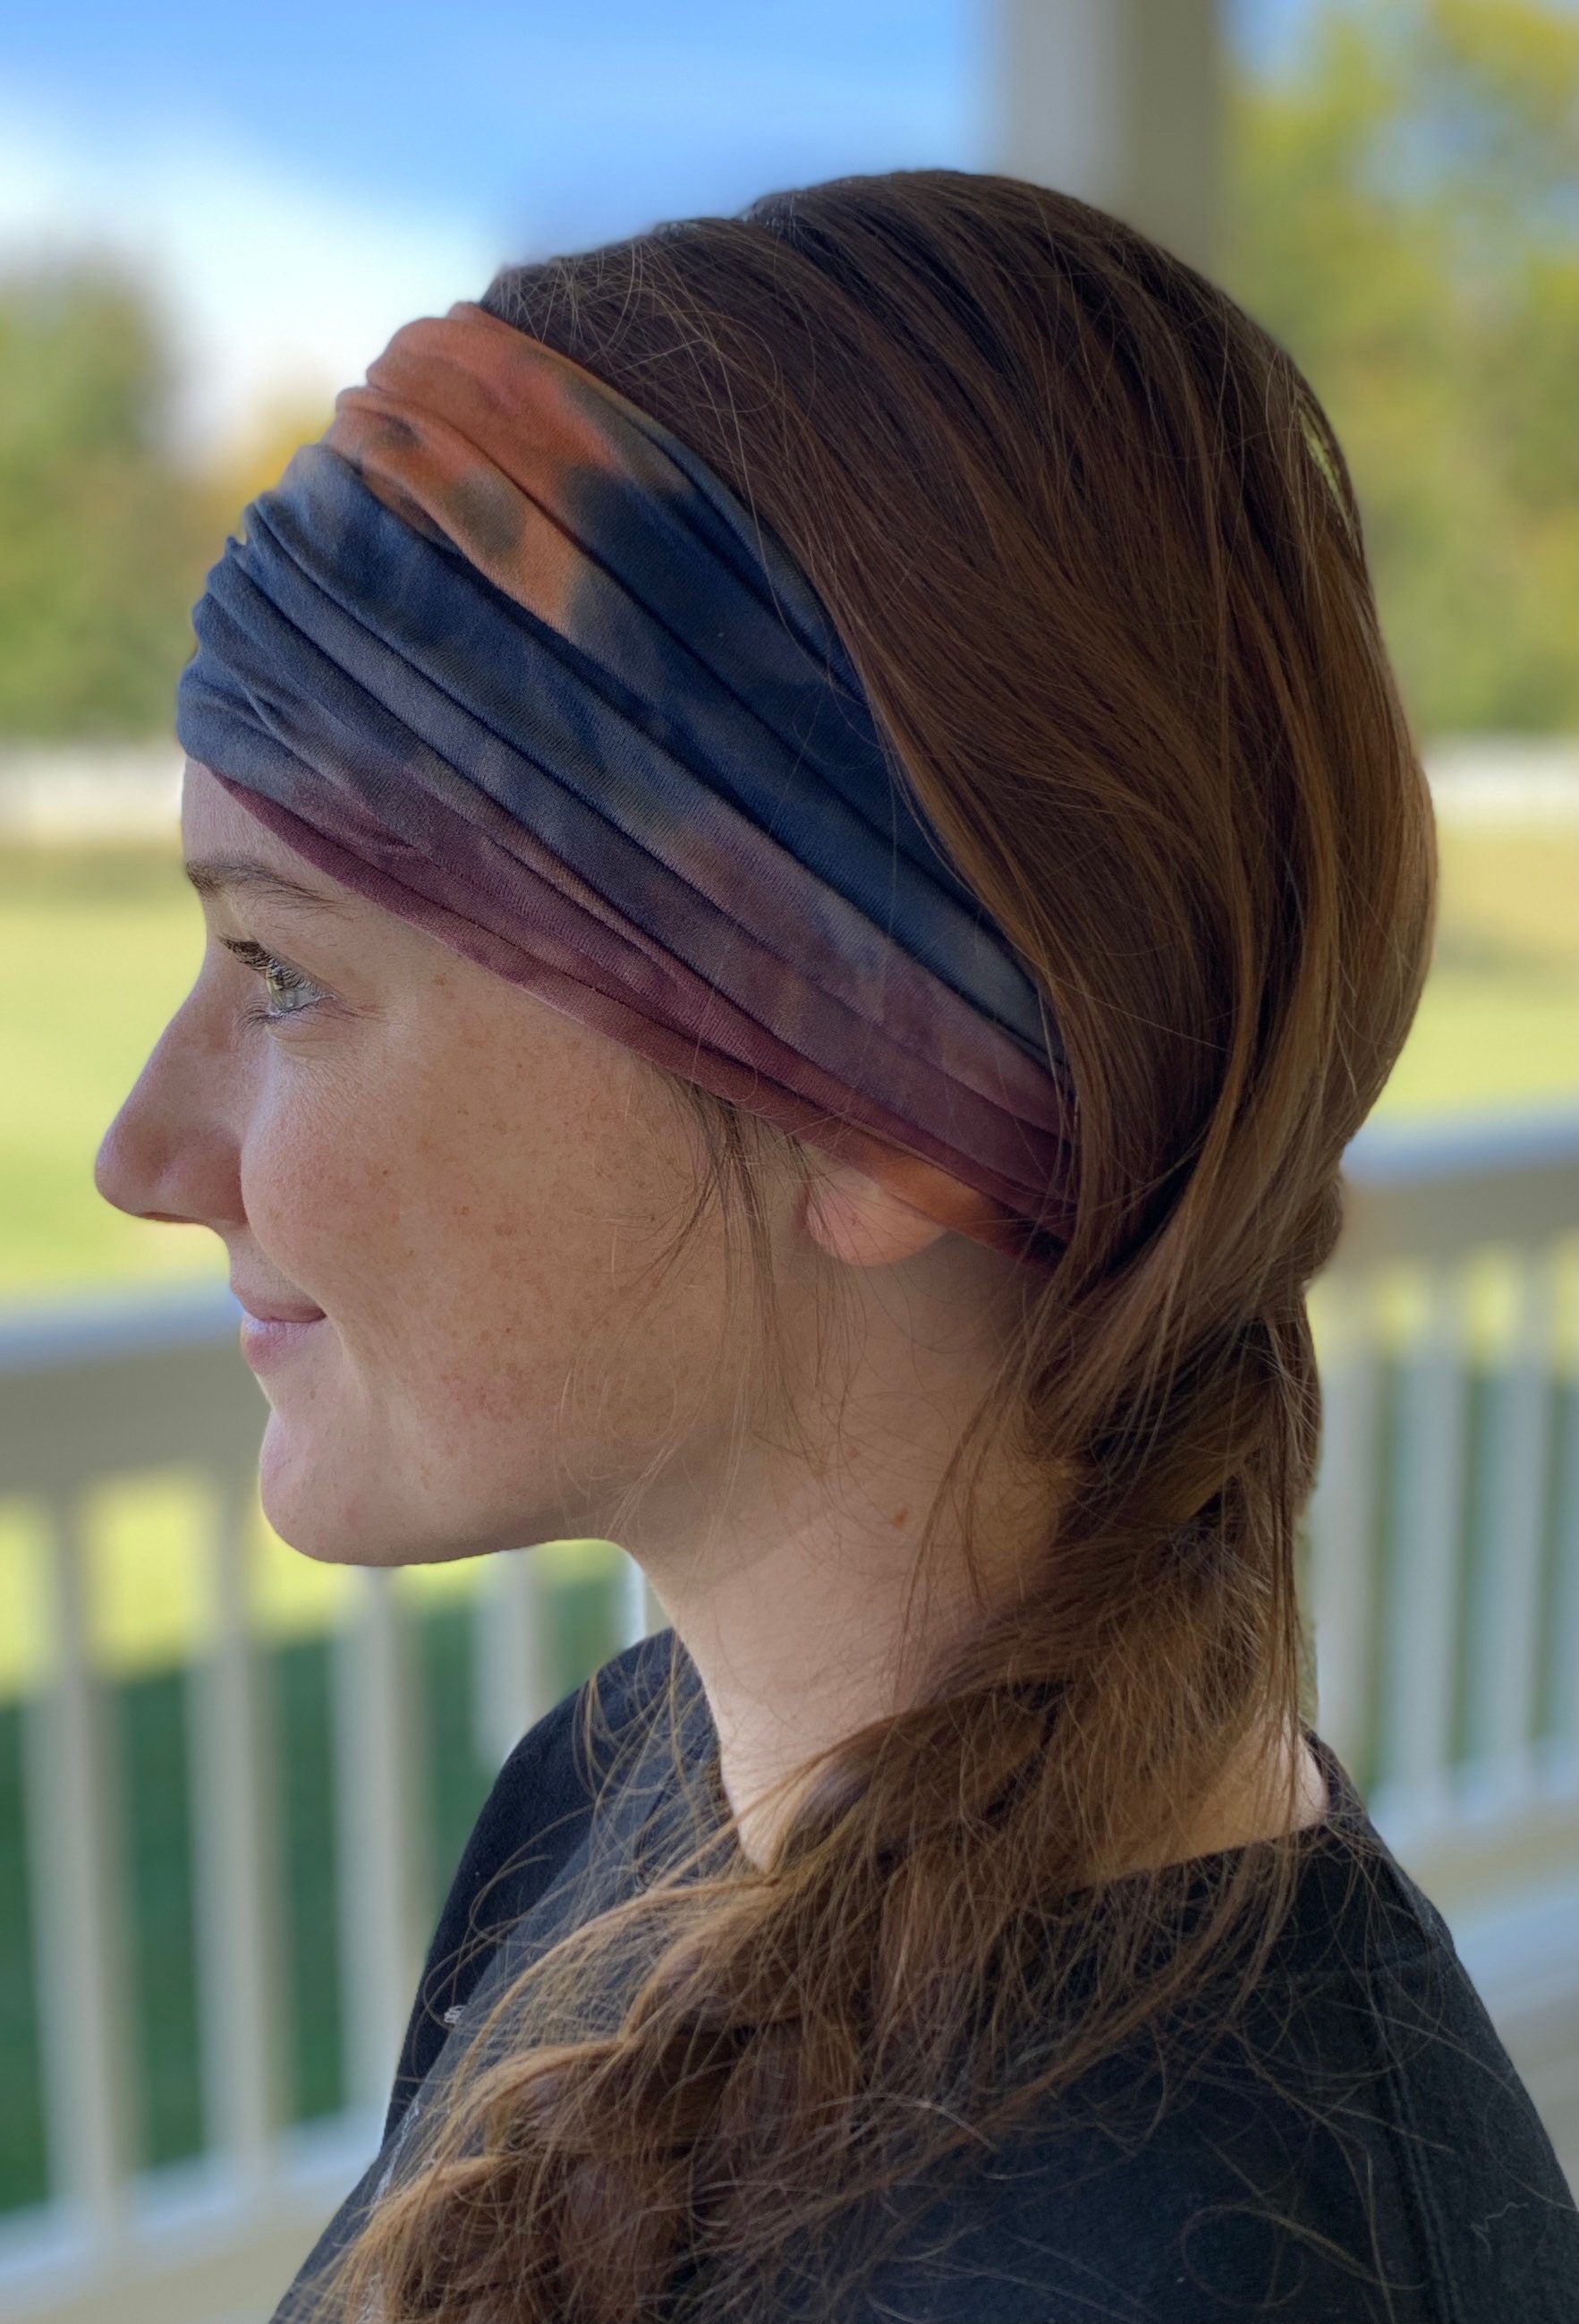 Headband Women Wide Beach Turban Casual Headband Strechy Soft Fabric 